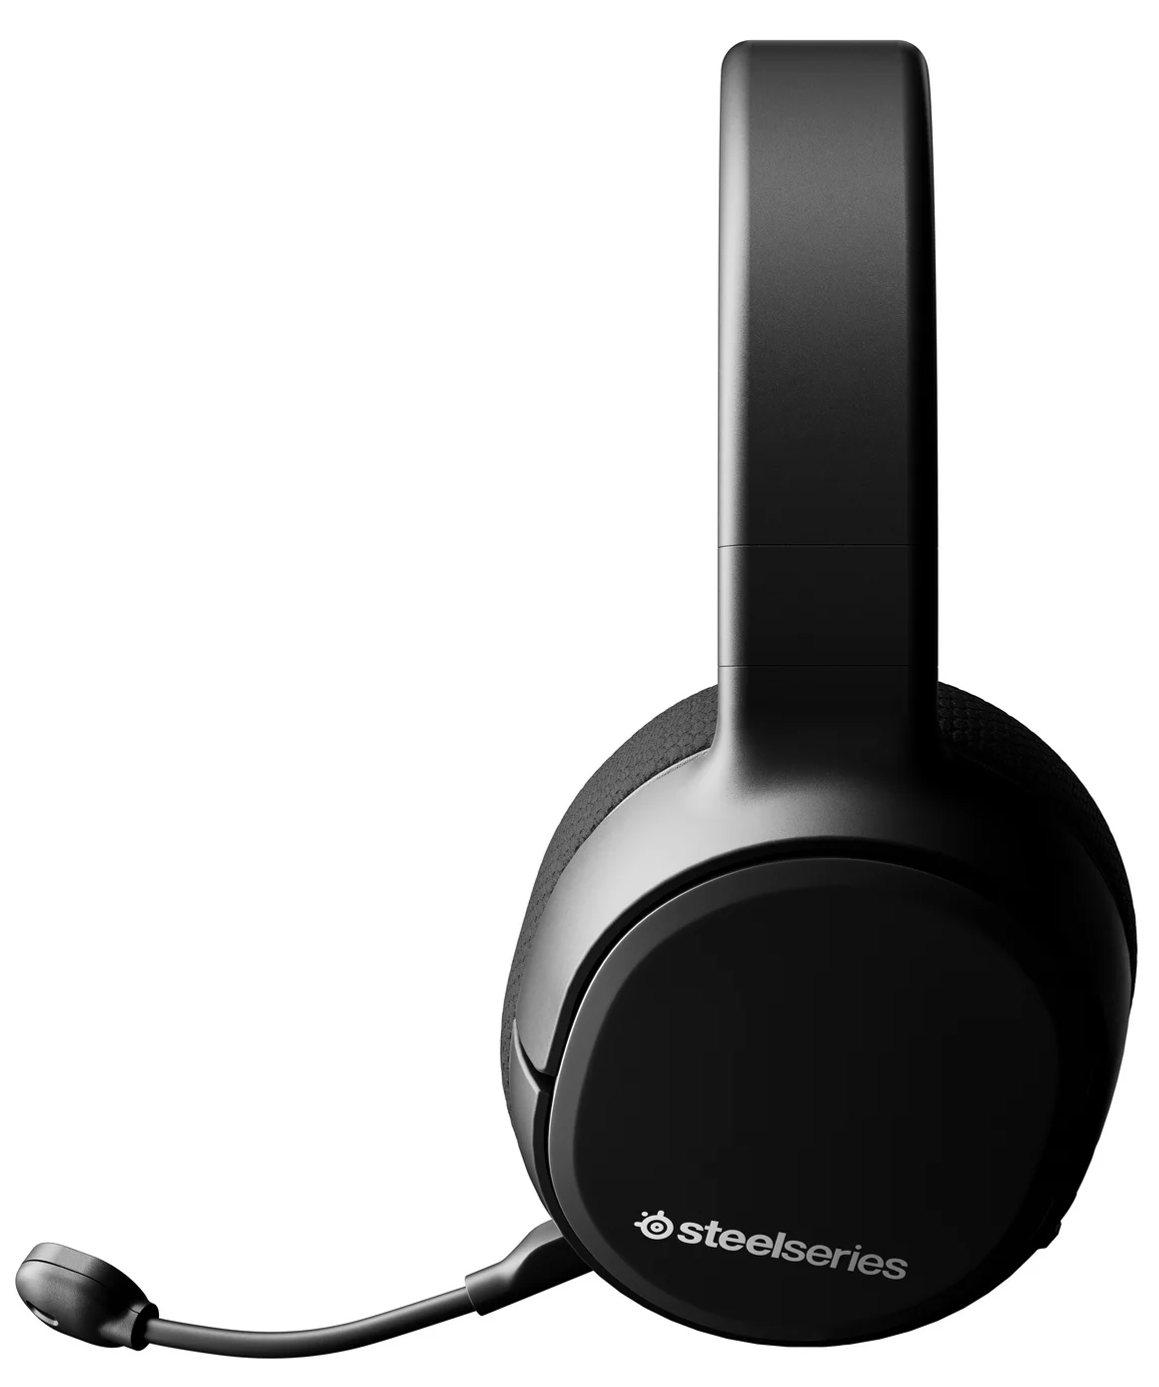 Steelseries Arctis 1 Wireless Headset $30 YMMV, In-Store at Walmart